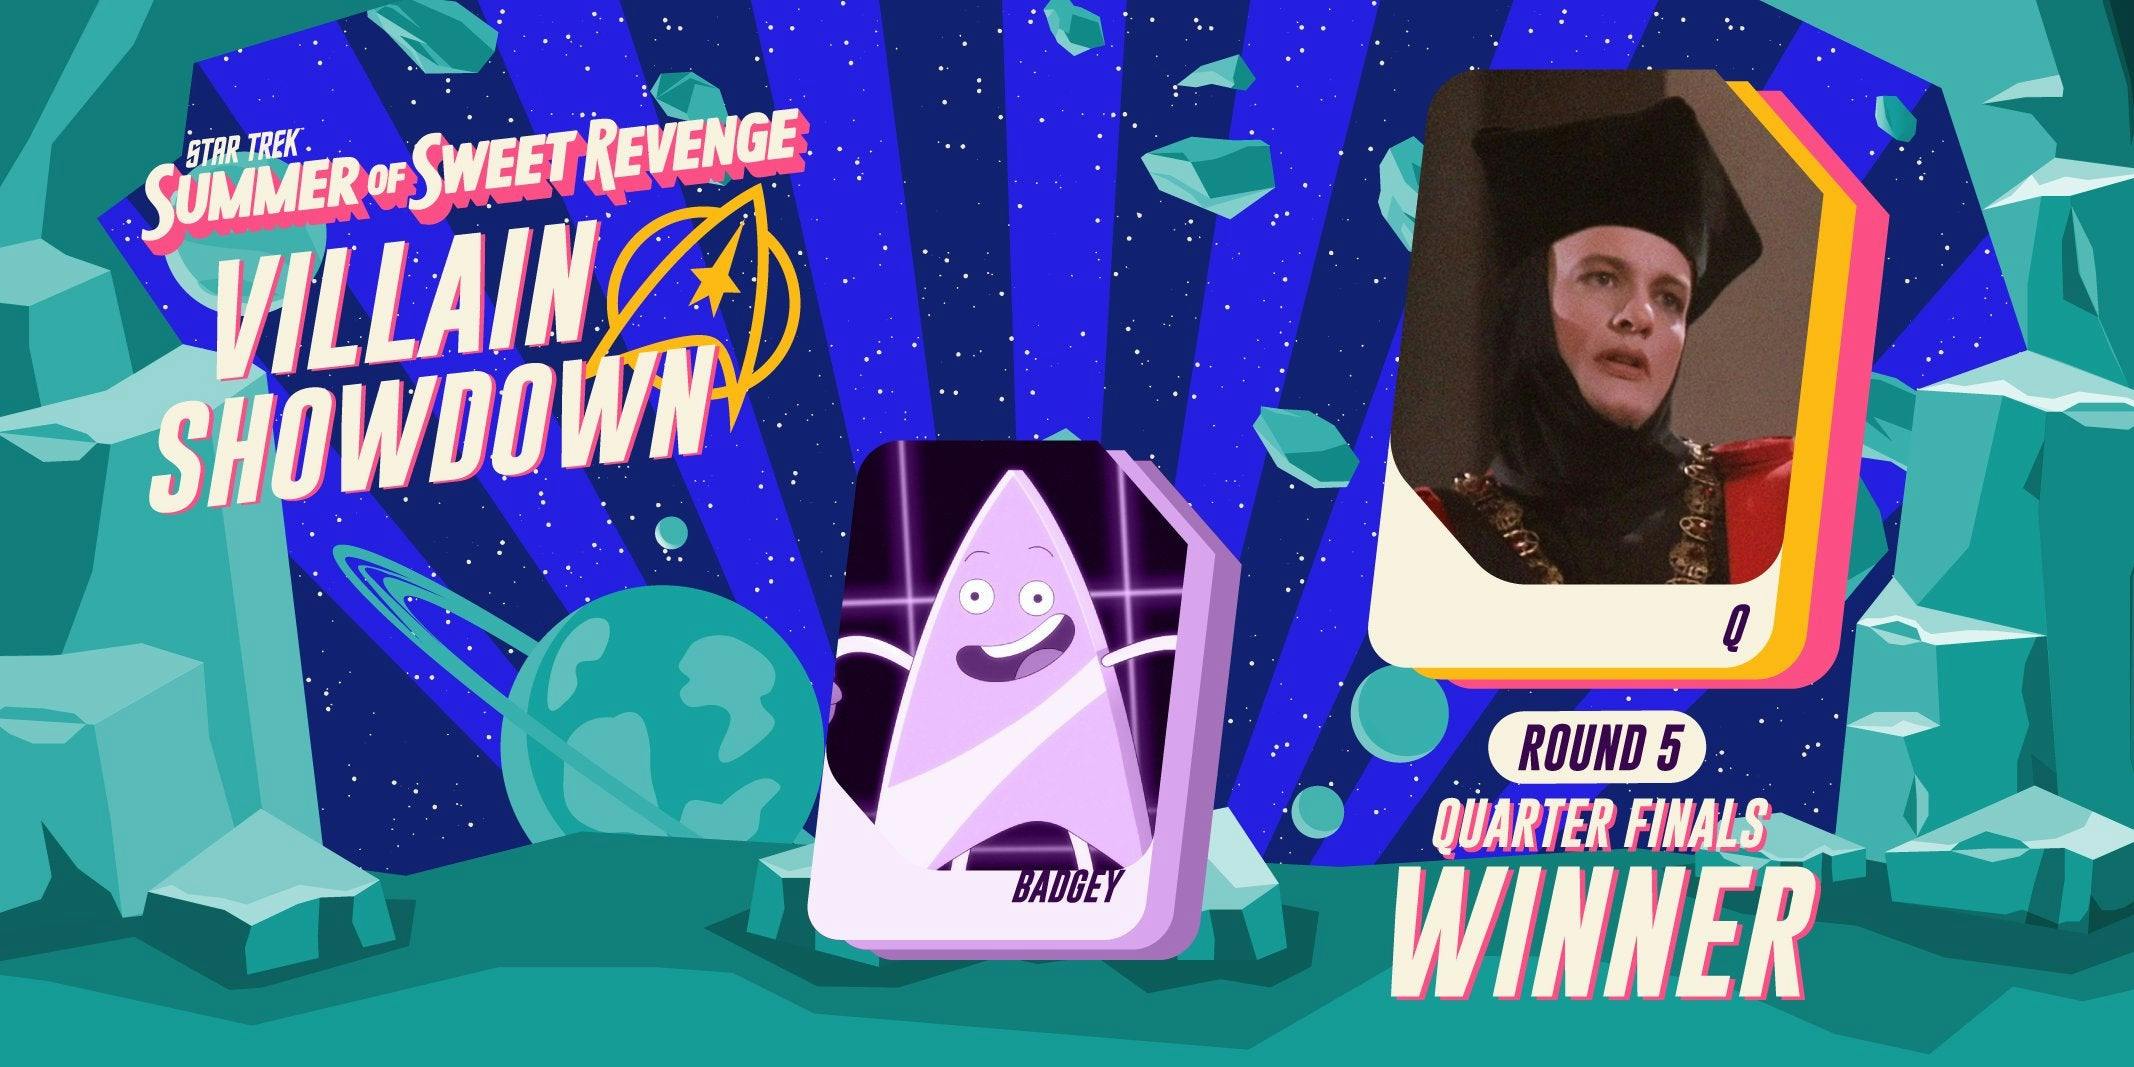 Q beats Badgey in the Quarter Finals of the Star Trek Villain Showdown